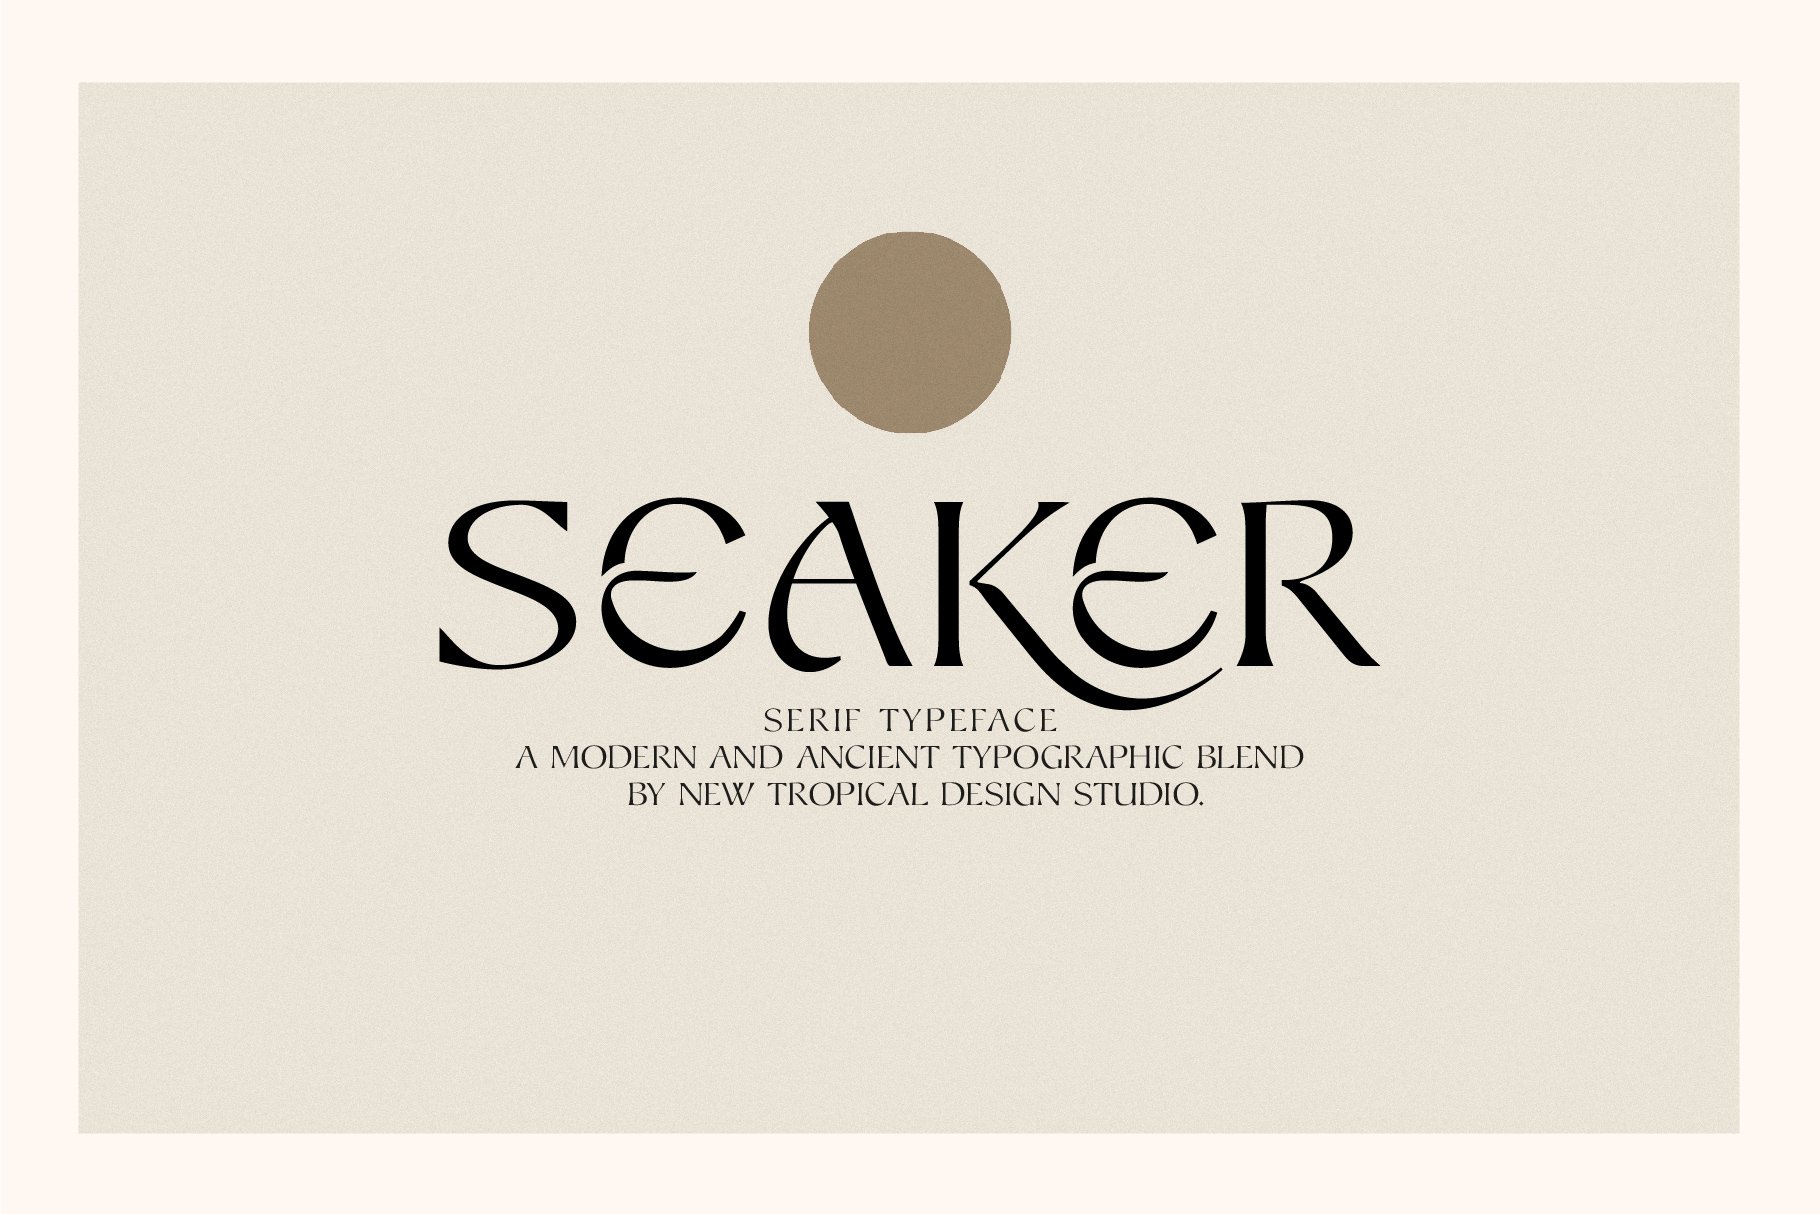 Seaker - Serif Typeface cover image.